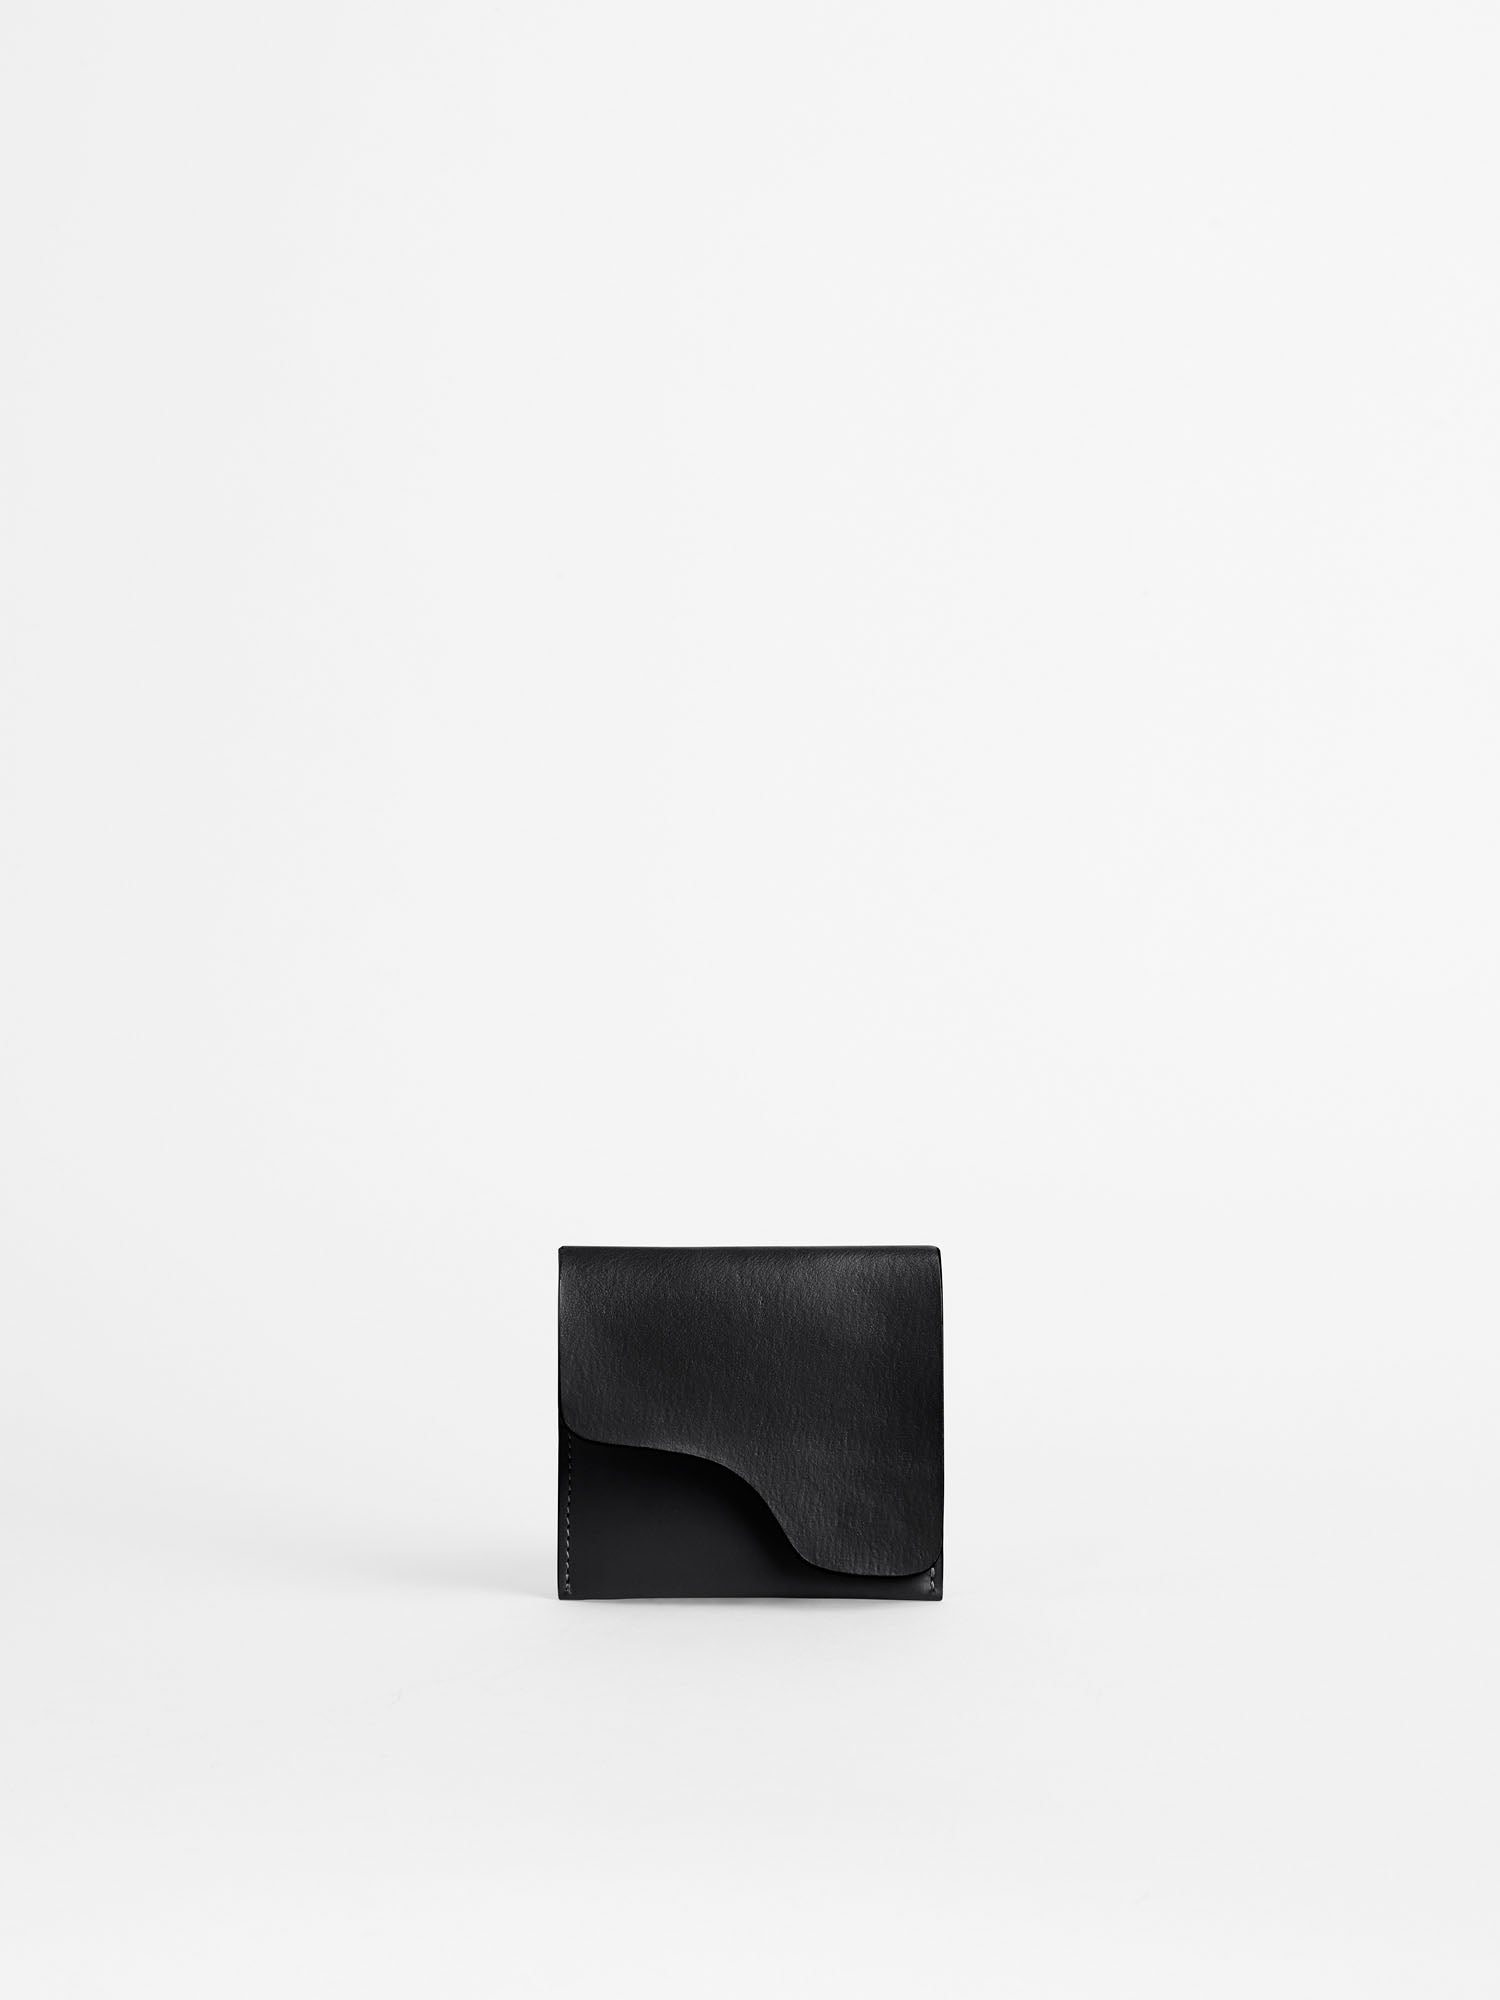 Olba Black Leather Wallet